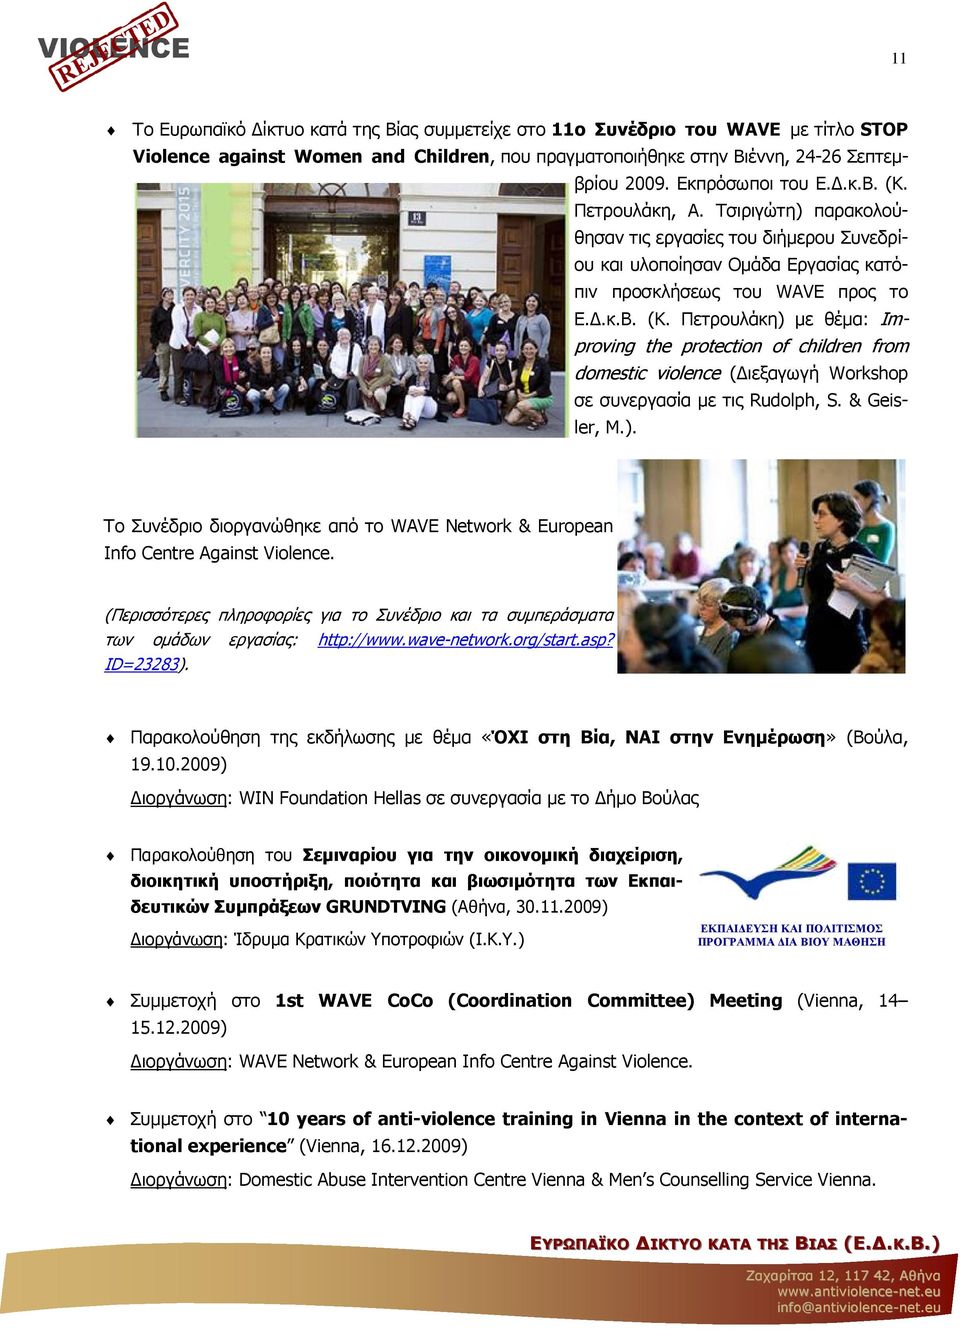 & Geisler, M.). Το Συνέδριο διοργανώθηκε από το WAVE Network & European Info Centre Against Violence. (Περισσότερες πληροφορίες για το Συνέδριο και τα συµπεράσµατα των οµάδων εργασίας: http://www.